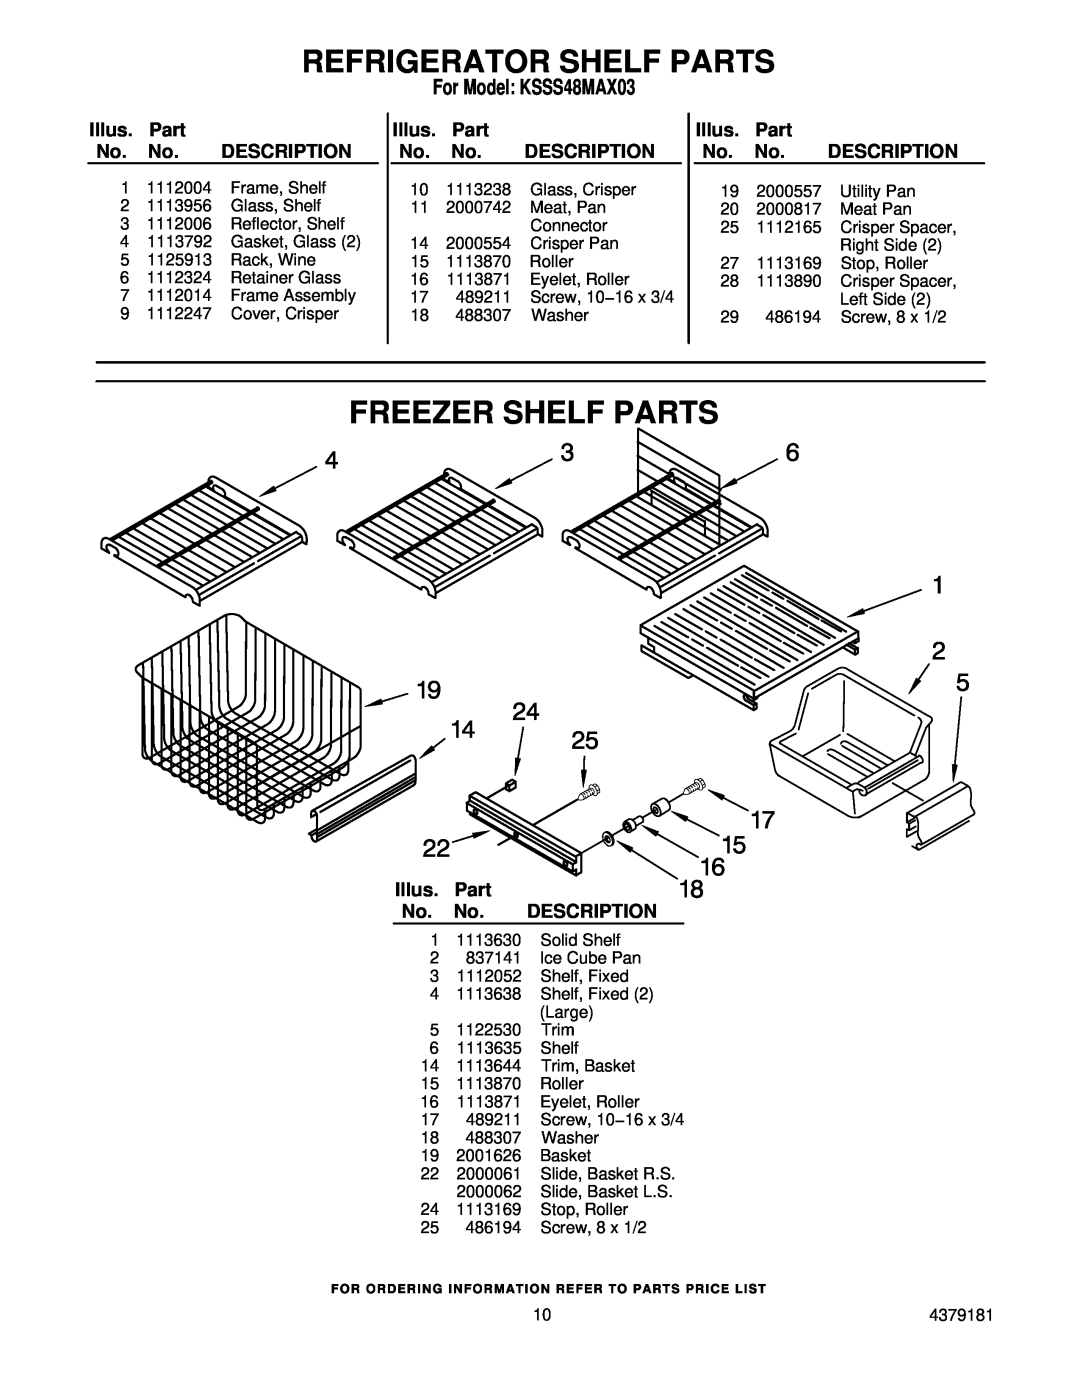 KitchenAid manual Freezer Shelf Parts, Refrigerator Shelf Parts, For Model KSSS48MAX03, Illus, Description 